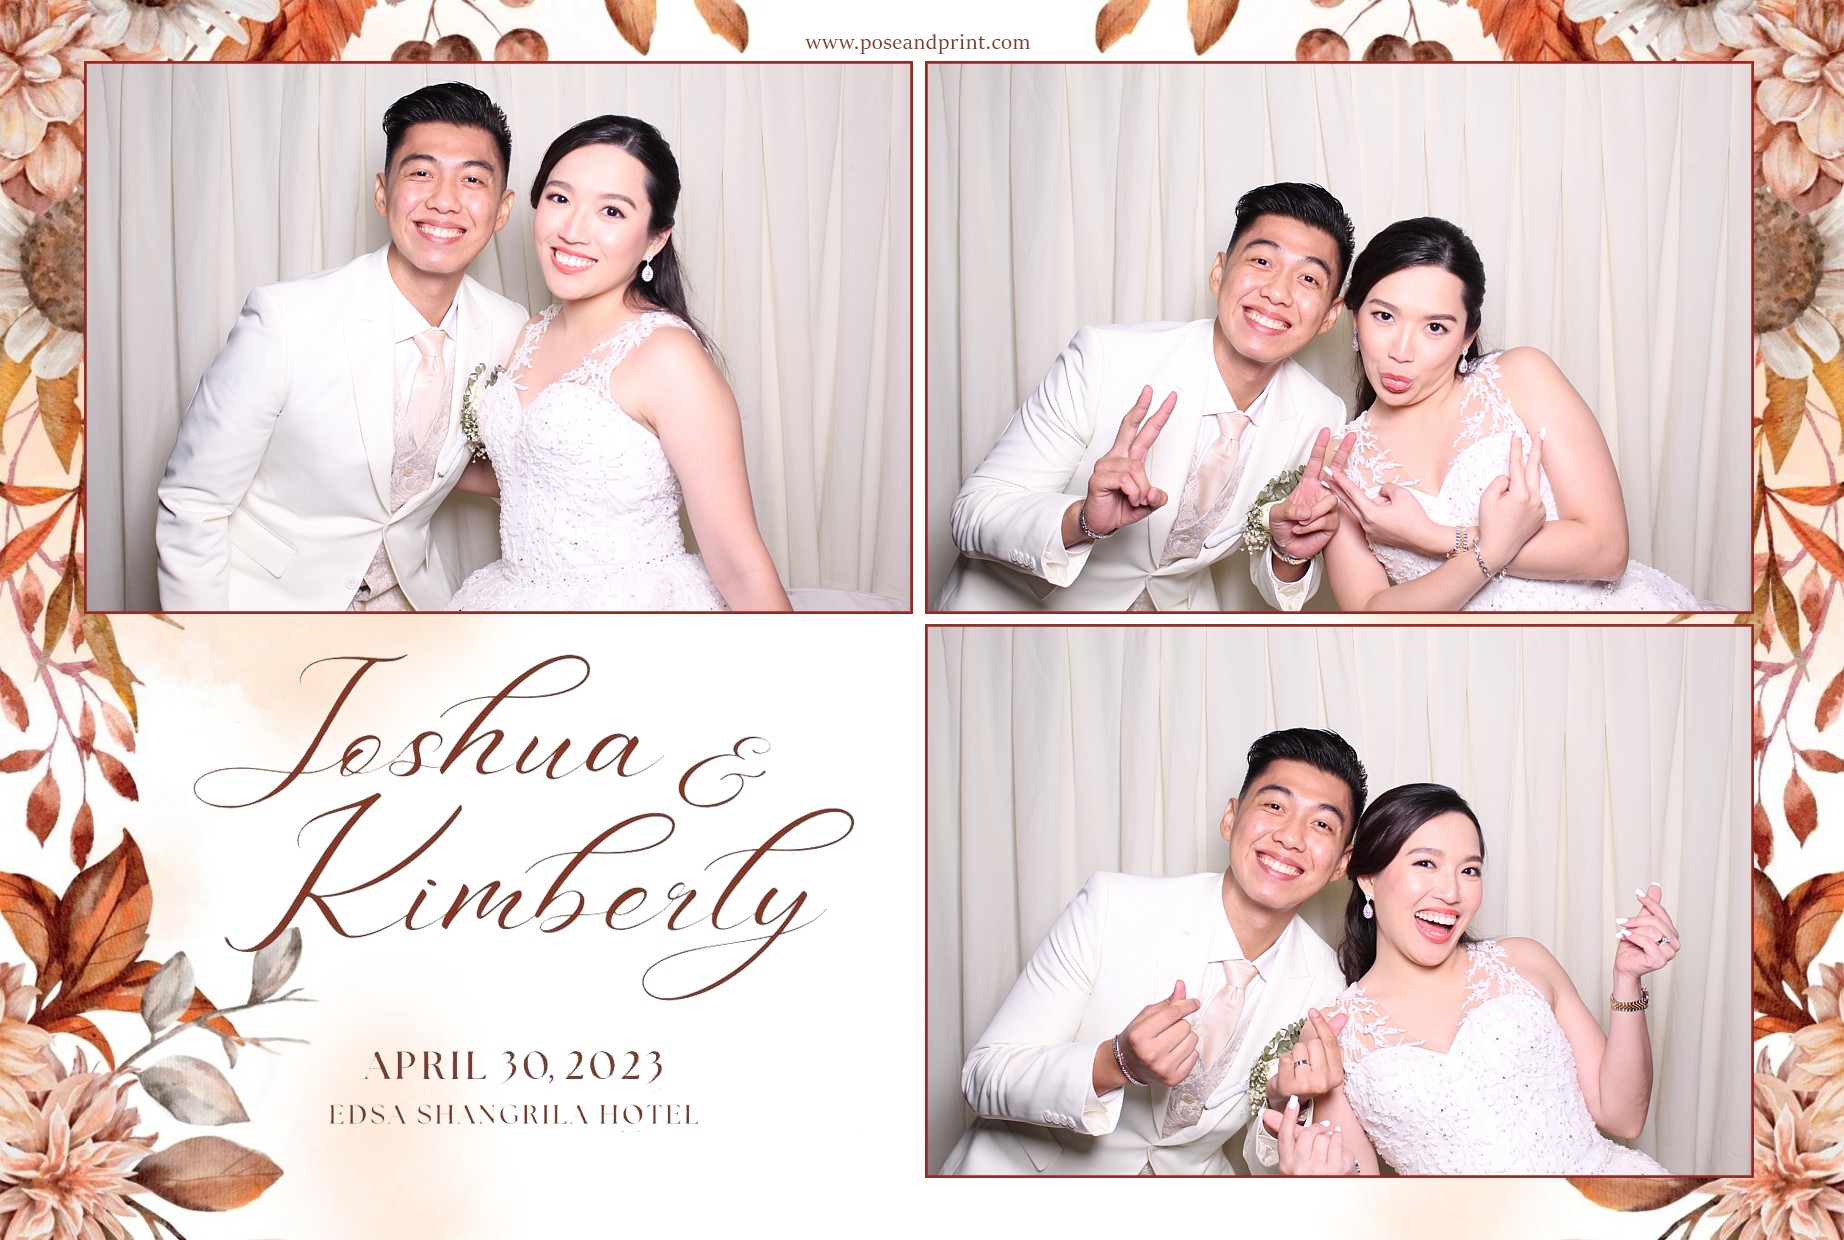 Joshua and Kimberly's Wedding